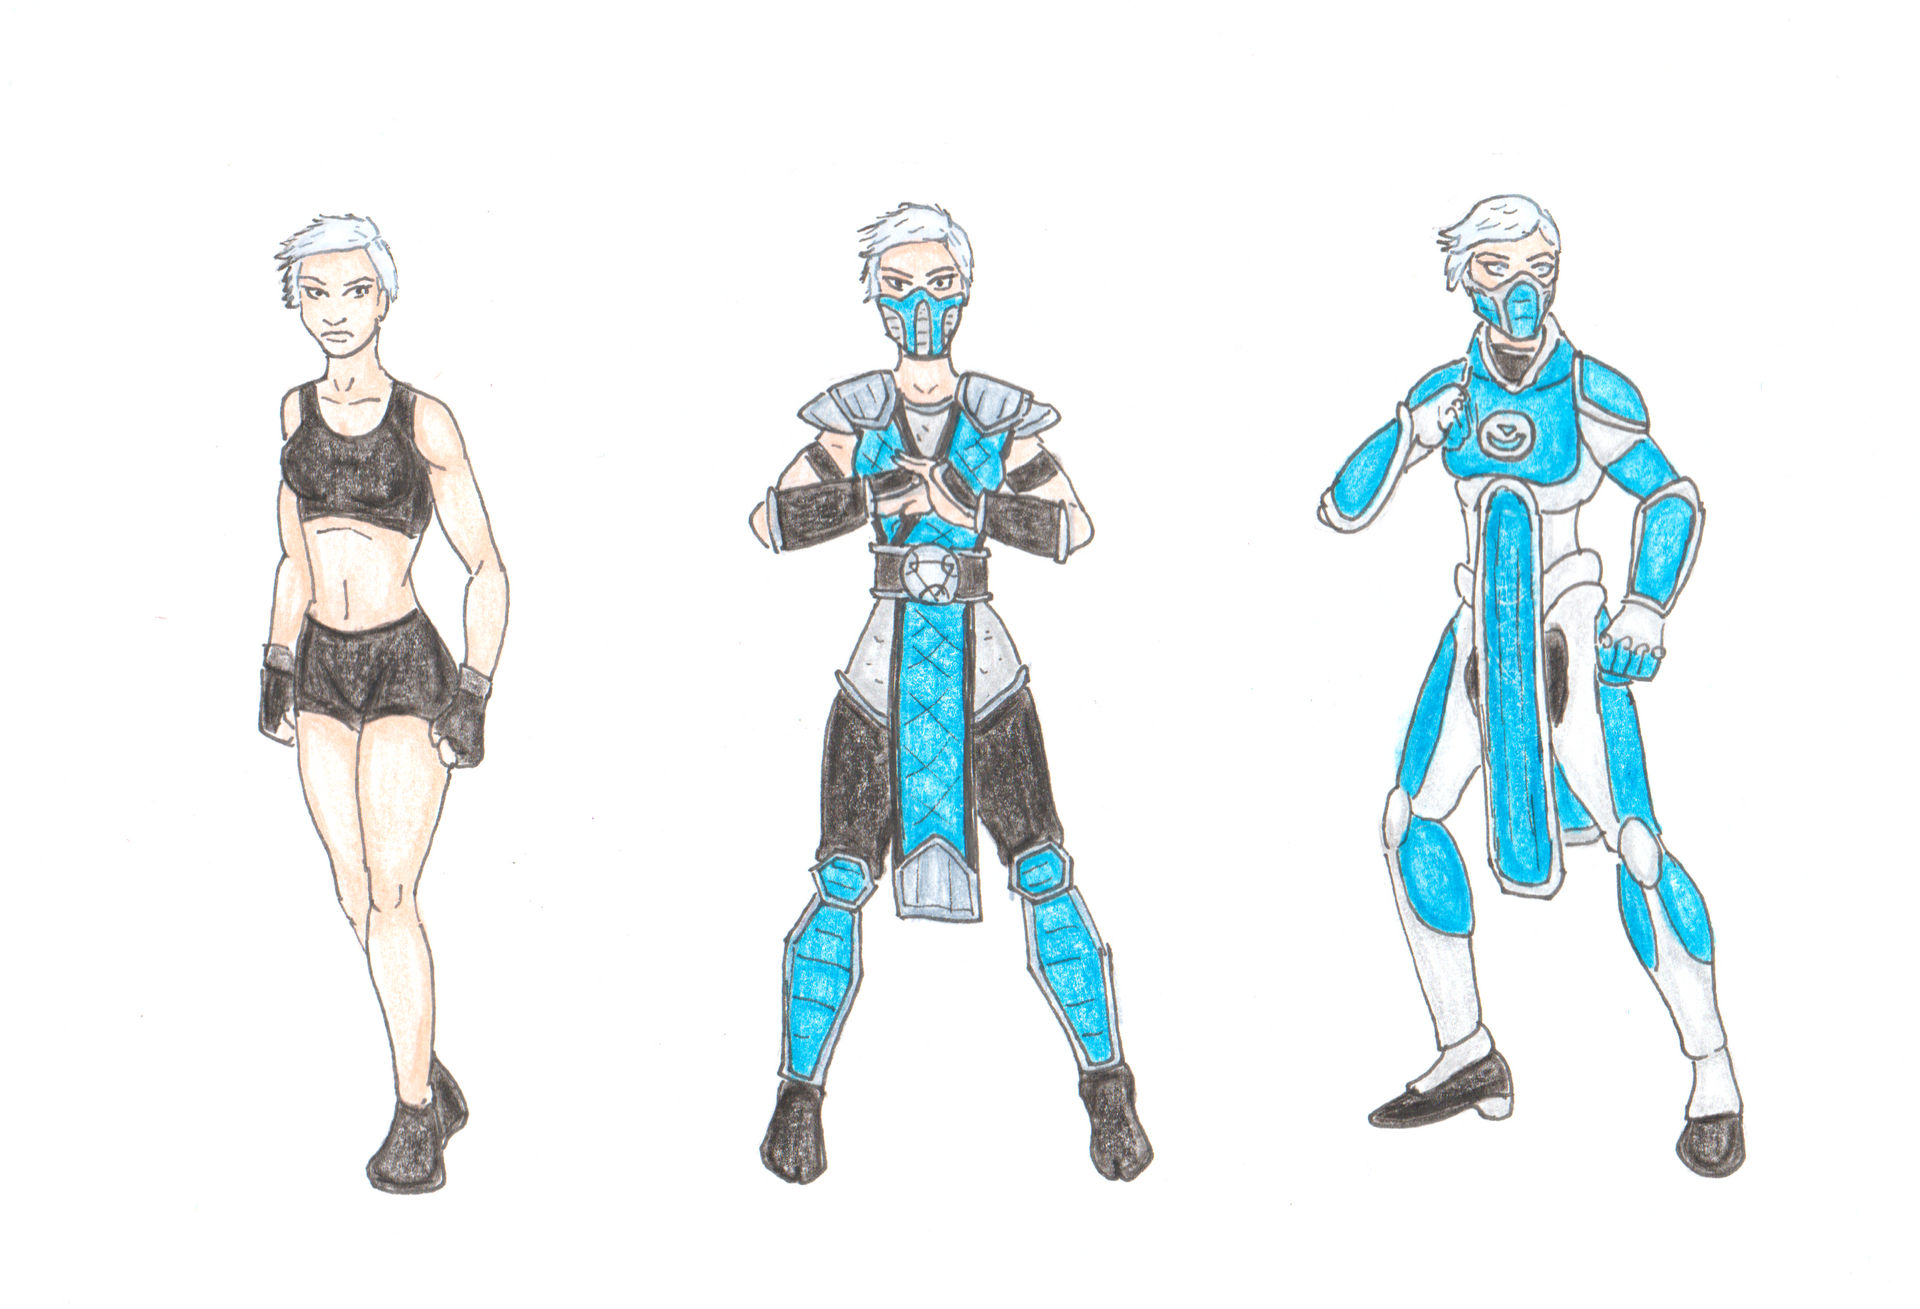 Mortal Kombat 1 - Primary Costumes by RazorsEdge701 on DeviantArt